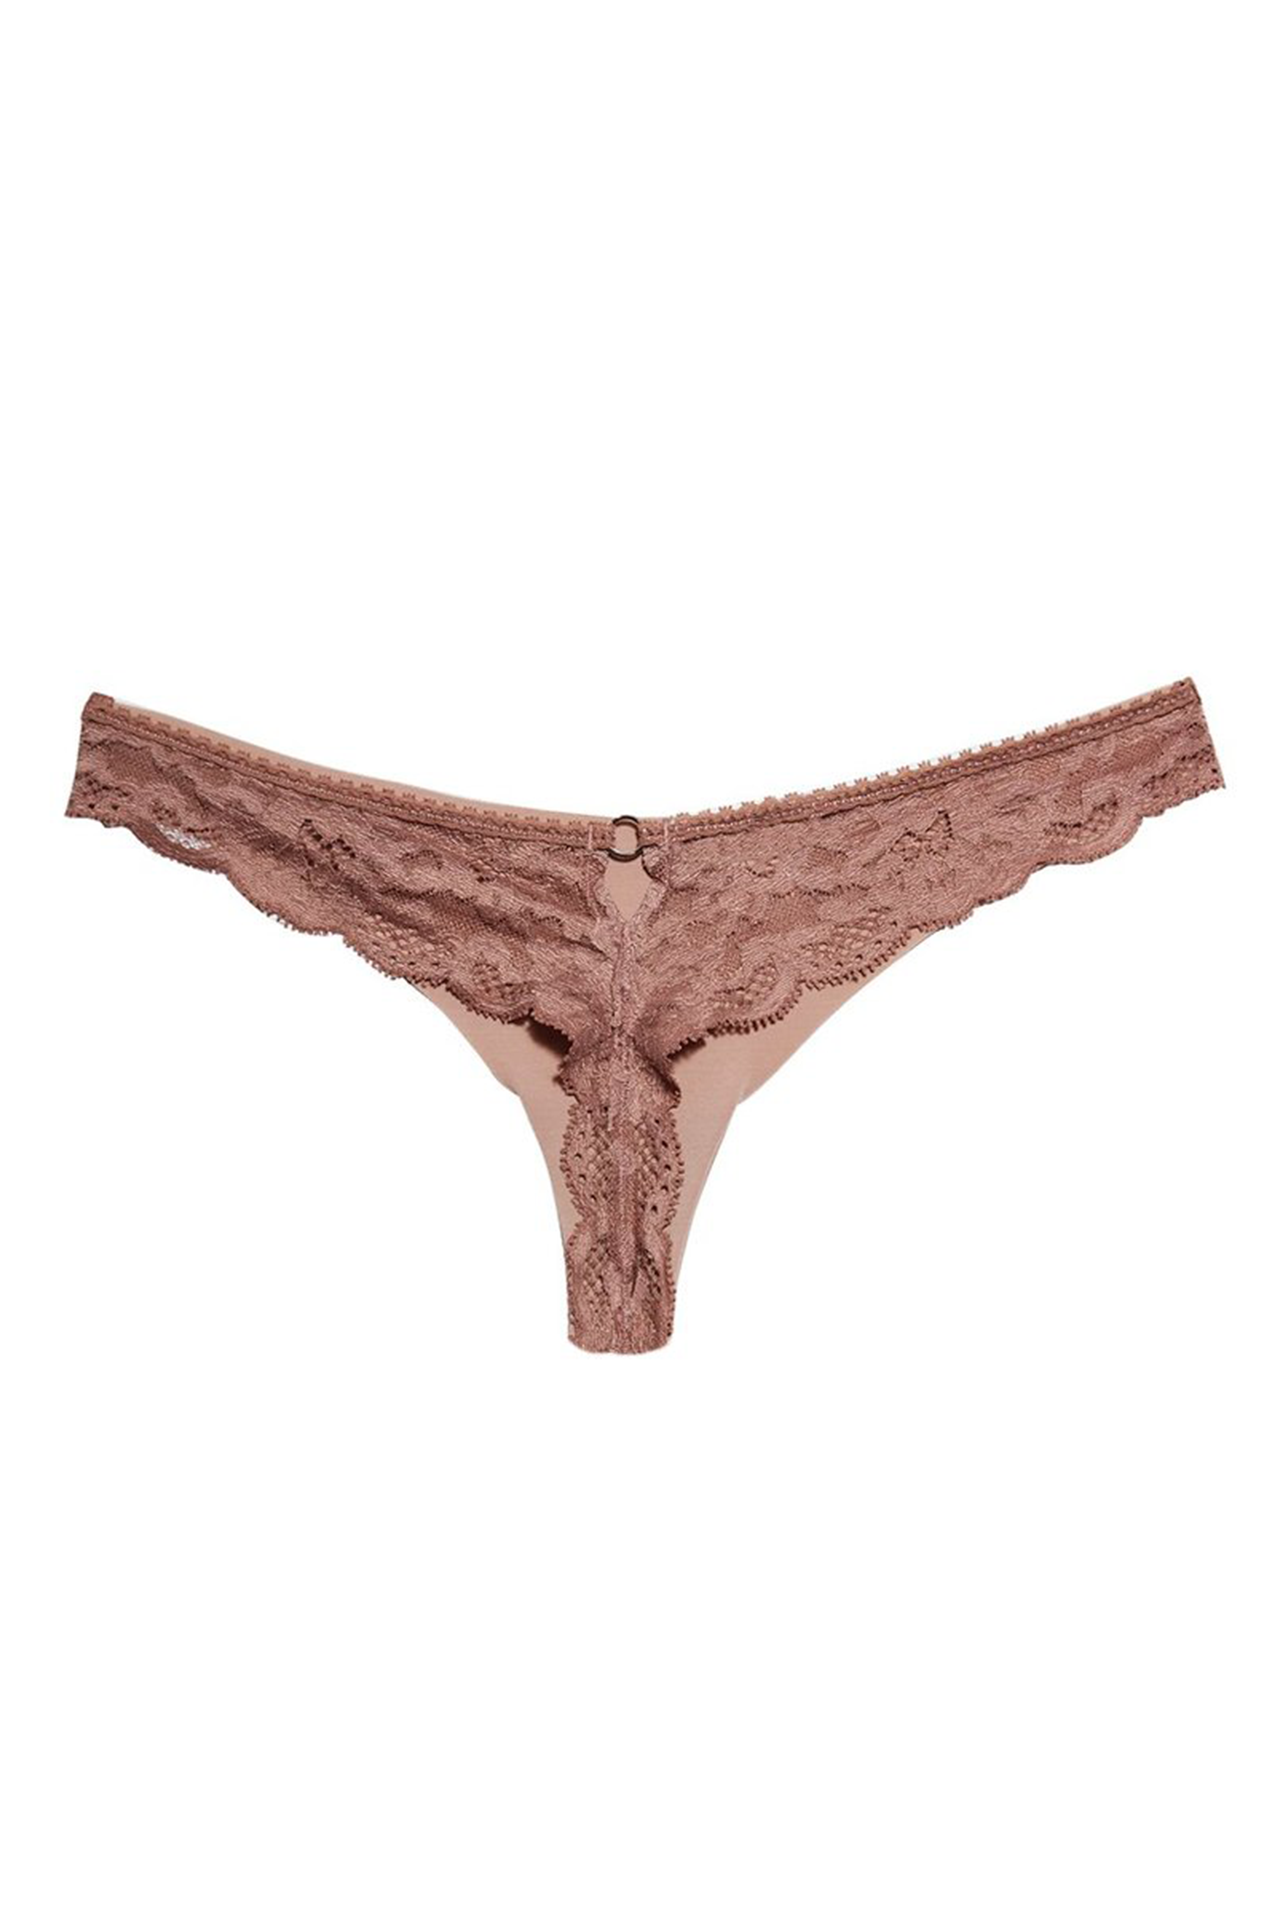 Fleur Du Mal Charlotte Lace Seamless Thong Panty Pack Tan Front Detail Image 2 (6555860926579)